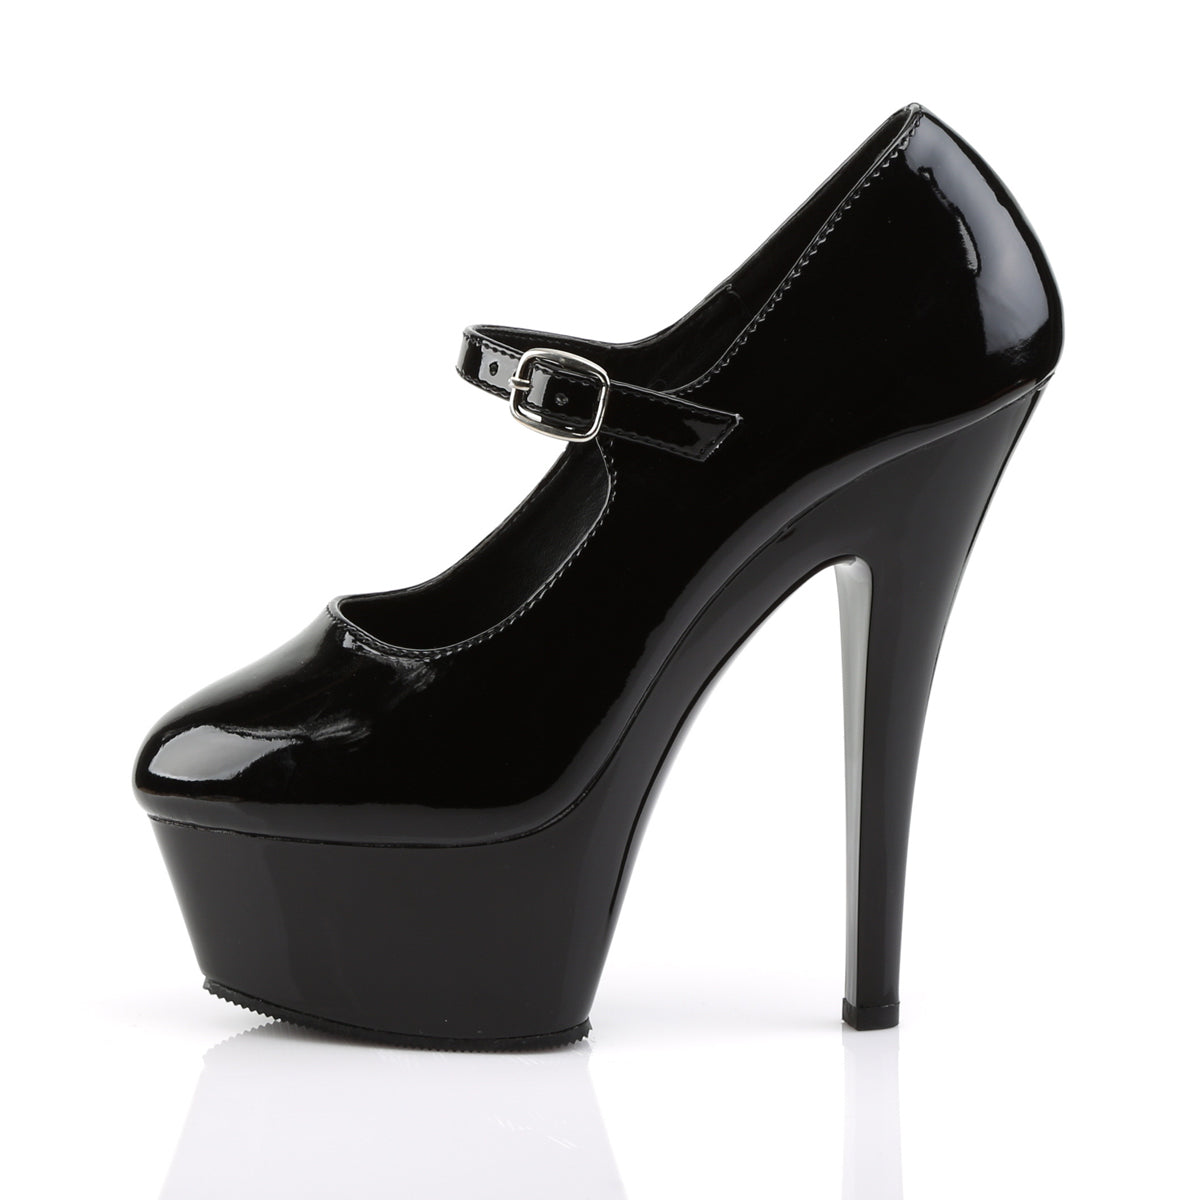 KISS-280 Pleaser 6" Heel Black Patent Pole Dancing Platforms-Pleaser- Sexy Shoes Pole Dance Heels